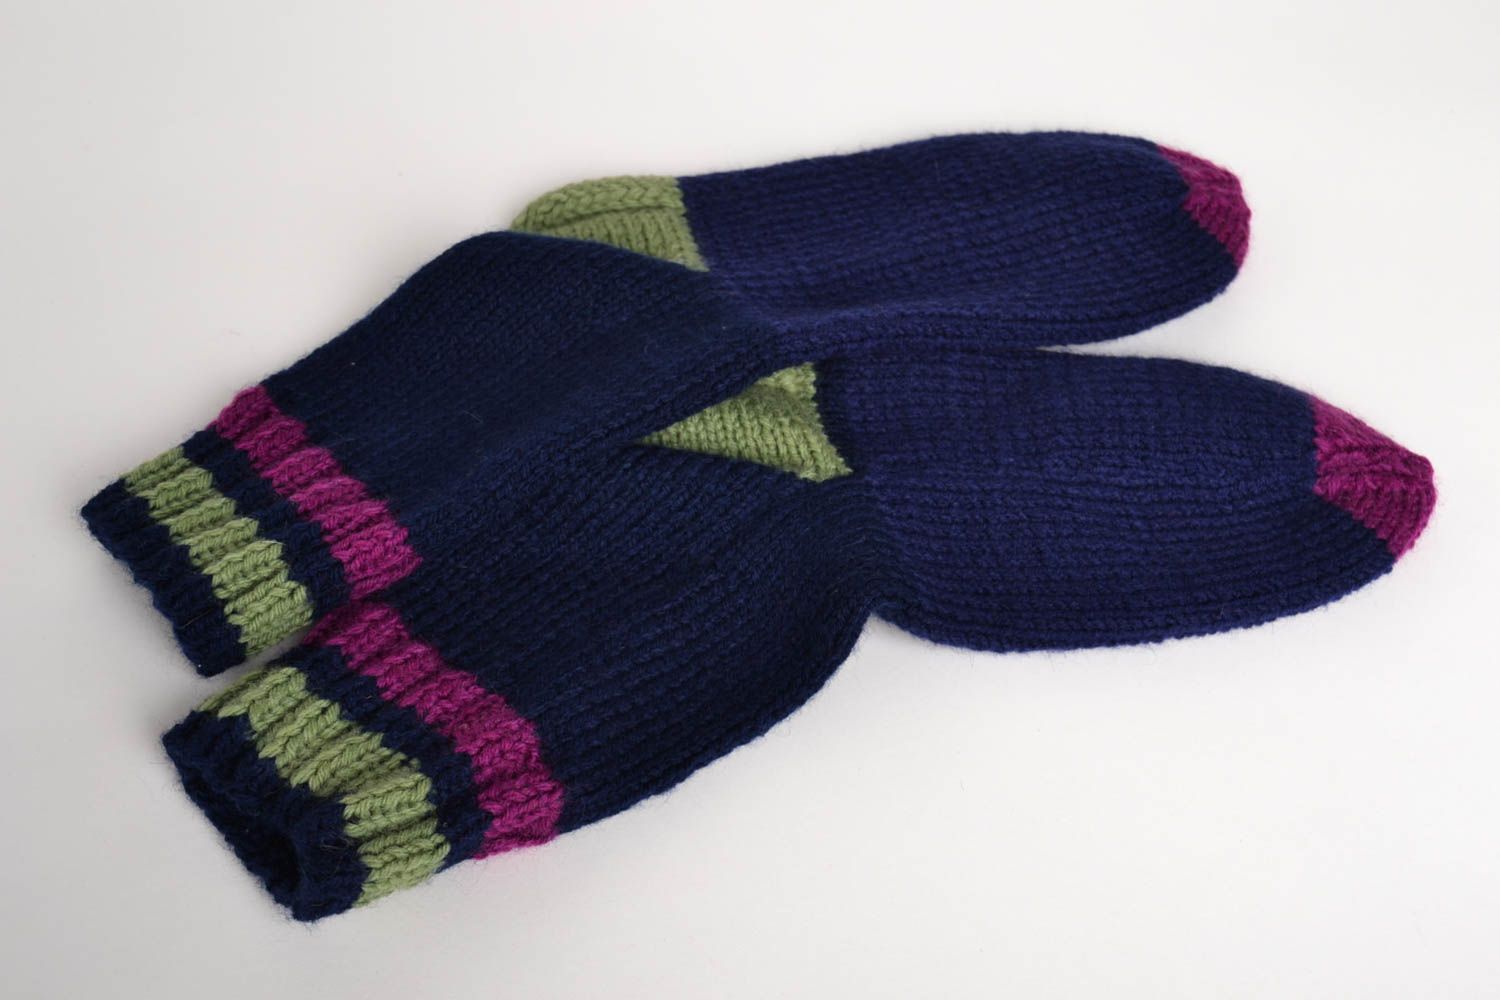 Stylish handmade knitted socks warm socks handmade accessories for girls photo 2